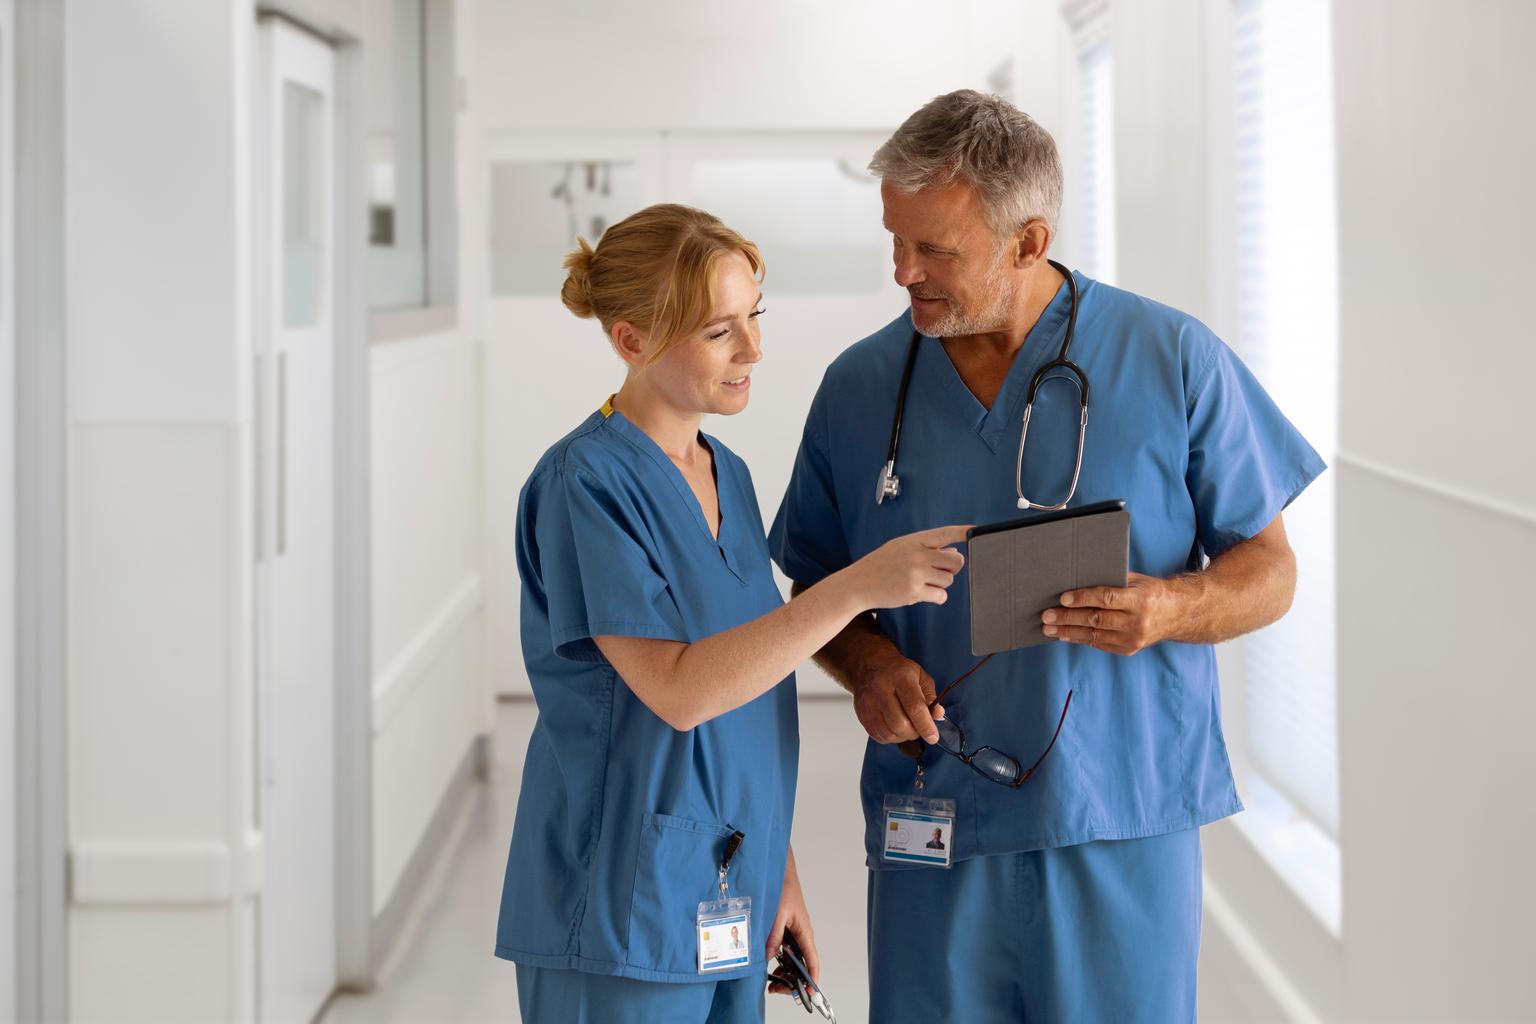 Nurses can thrive in a multigenerational workforce